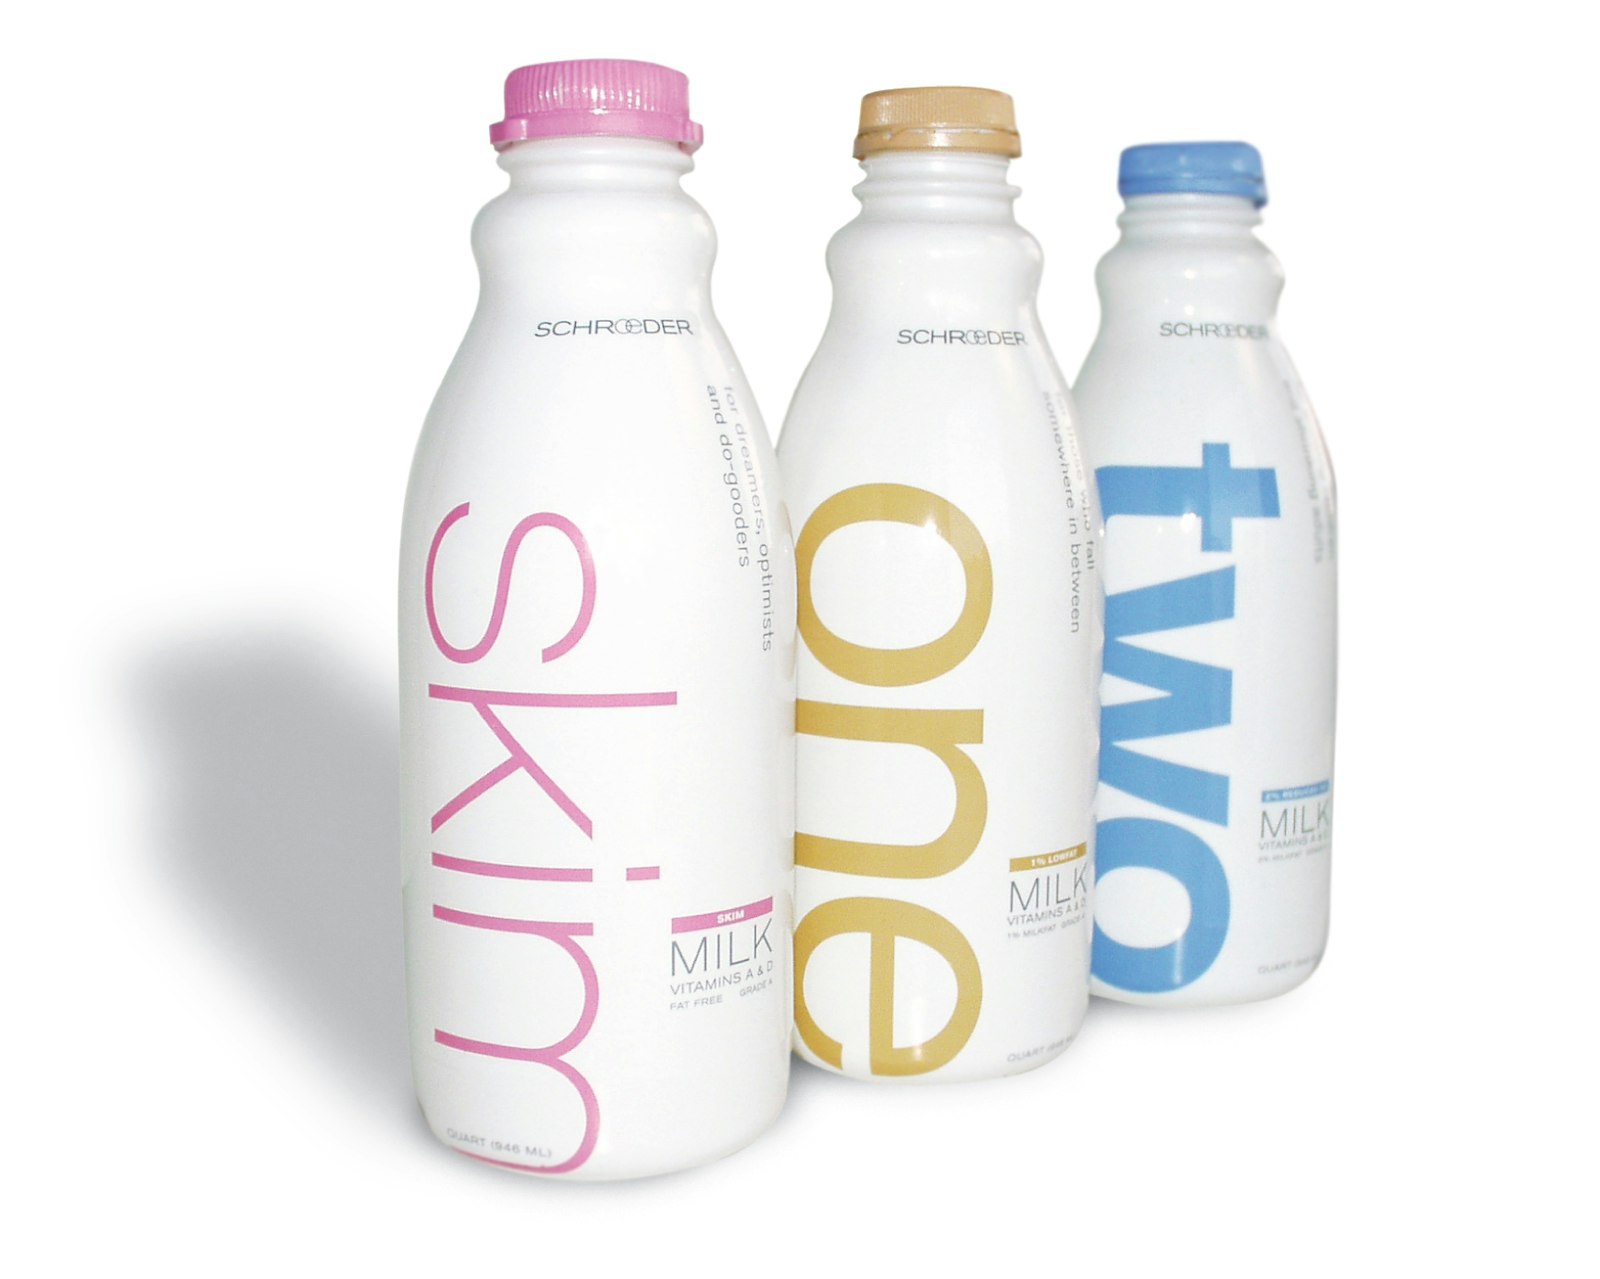 Schroeder milk graphic system design for three product bottles.